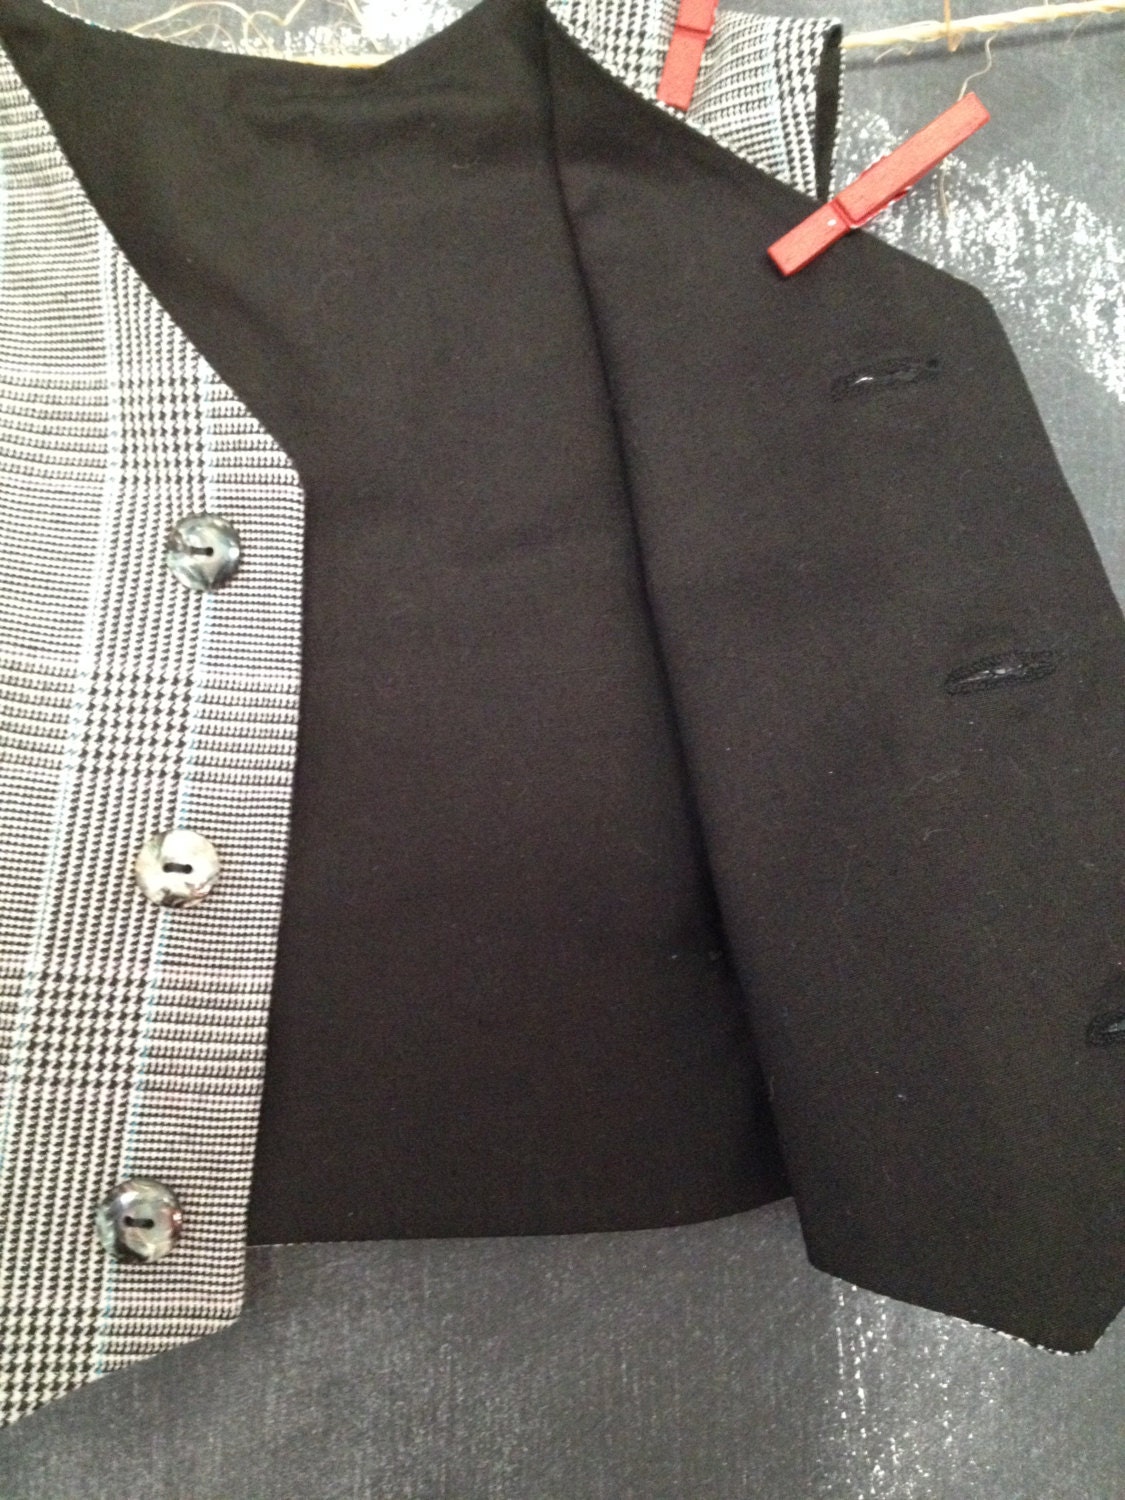 Ring Bearer Suit Pleated Shorts Short Sleeve Shirt Lined | Etsy